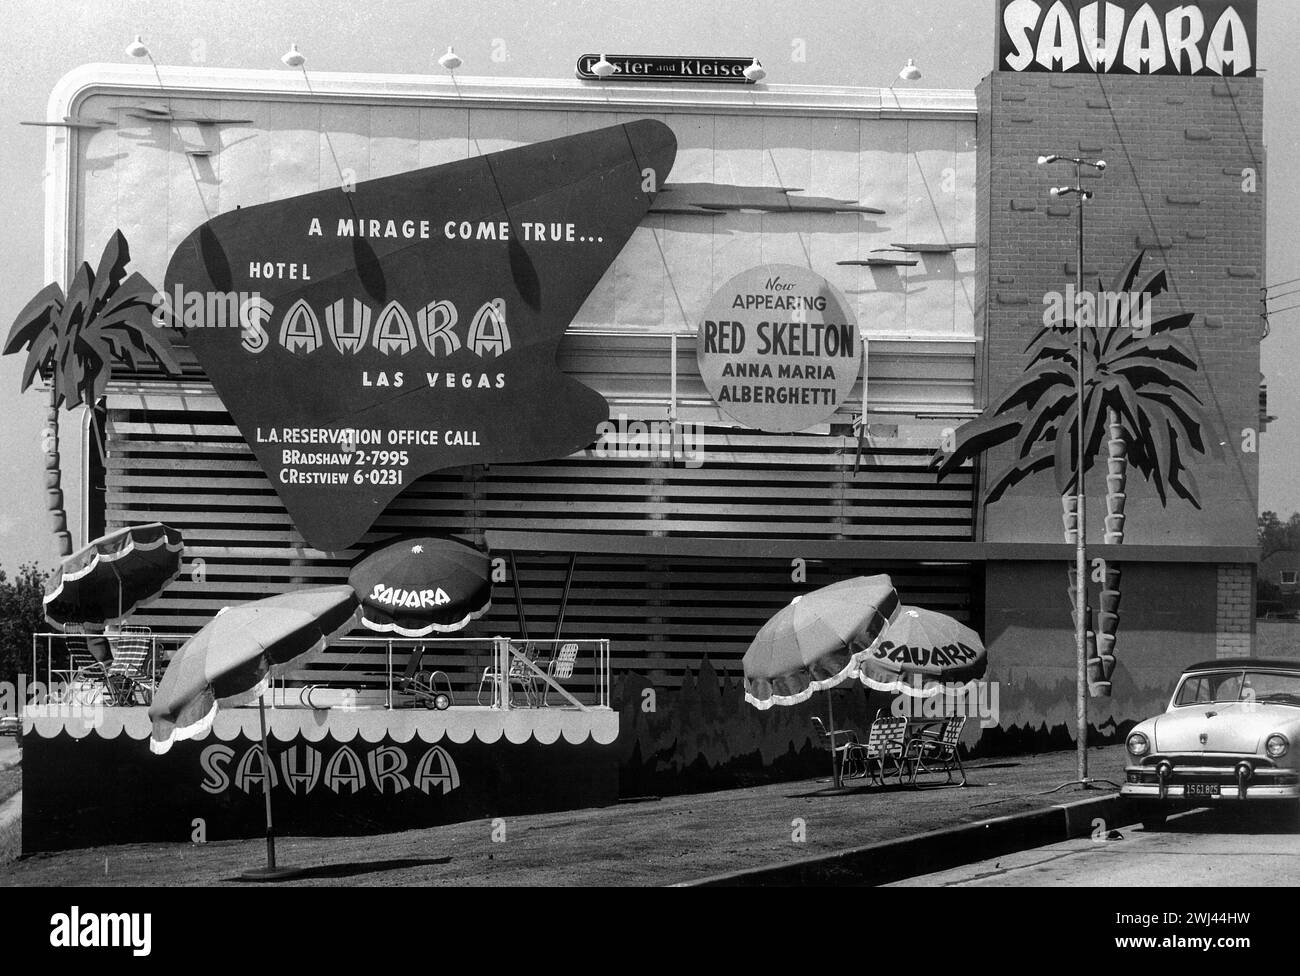 Sahara Hotel, Las Vegas, cartellone, piscina, 1953, Sunset Strip, West Hollywood, Los Angeles, California, Stati Uniti, America, America, auto, Classic, vintage, storico, anni '1950 Foto Stock